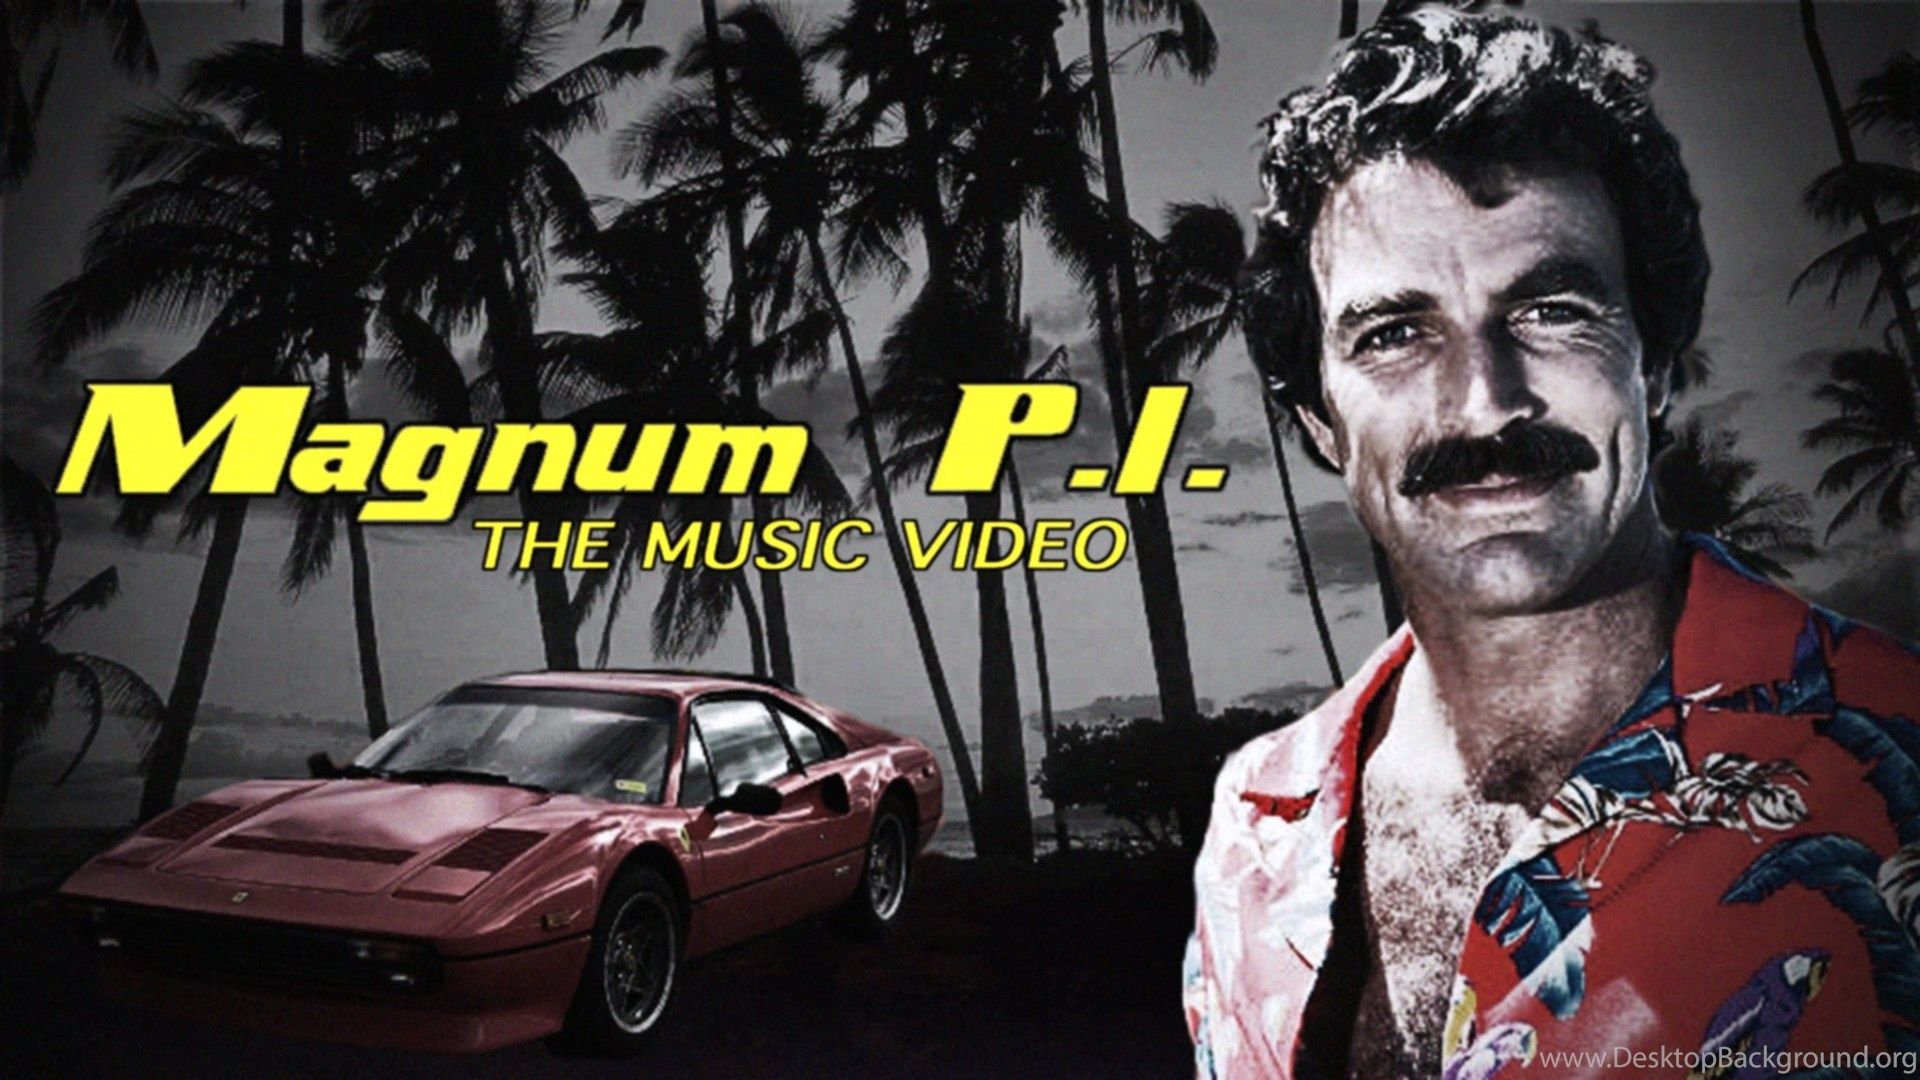 Tribute To Magnum, P.i. Magnum, P.i. Theme The Music Video. Desktop Background